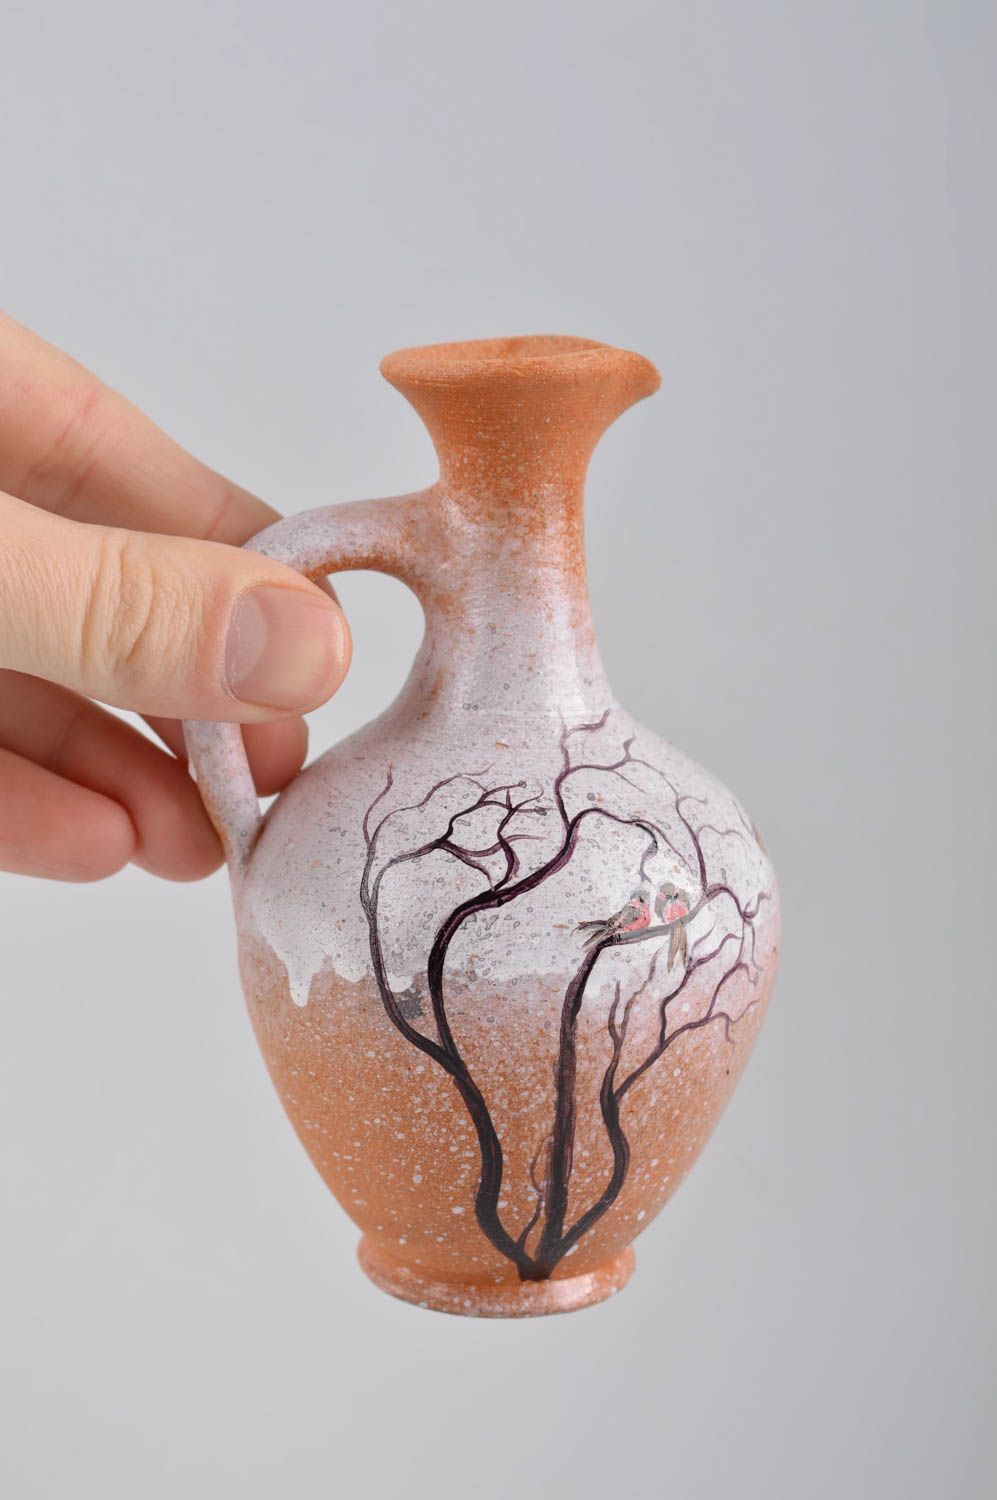 Handmade ceramic painted decorative wine decanter 0,38 lb photo 5